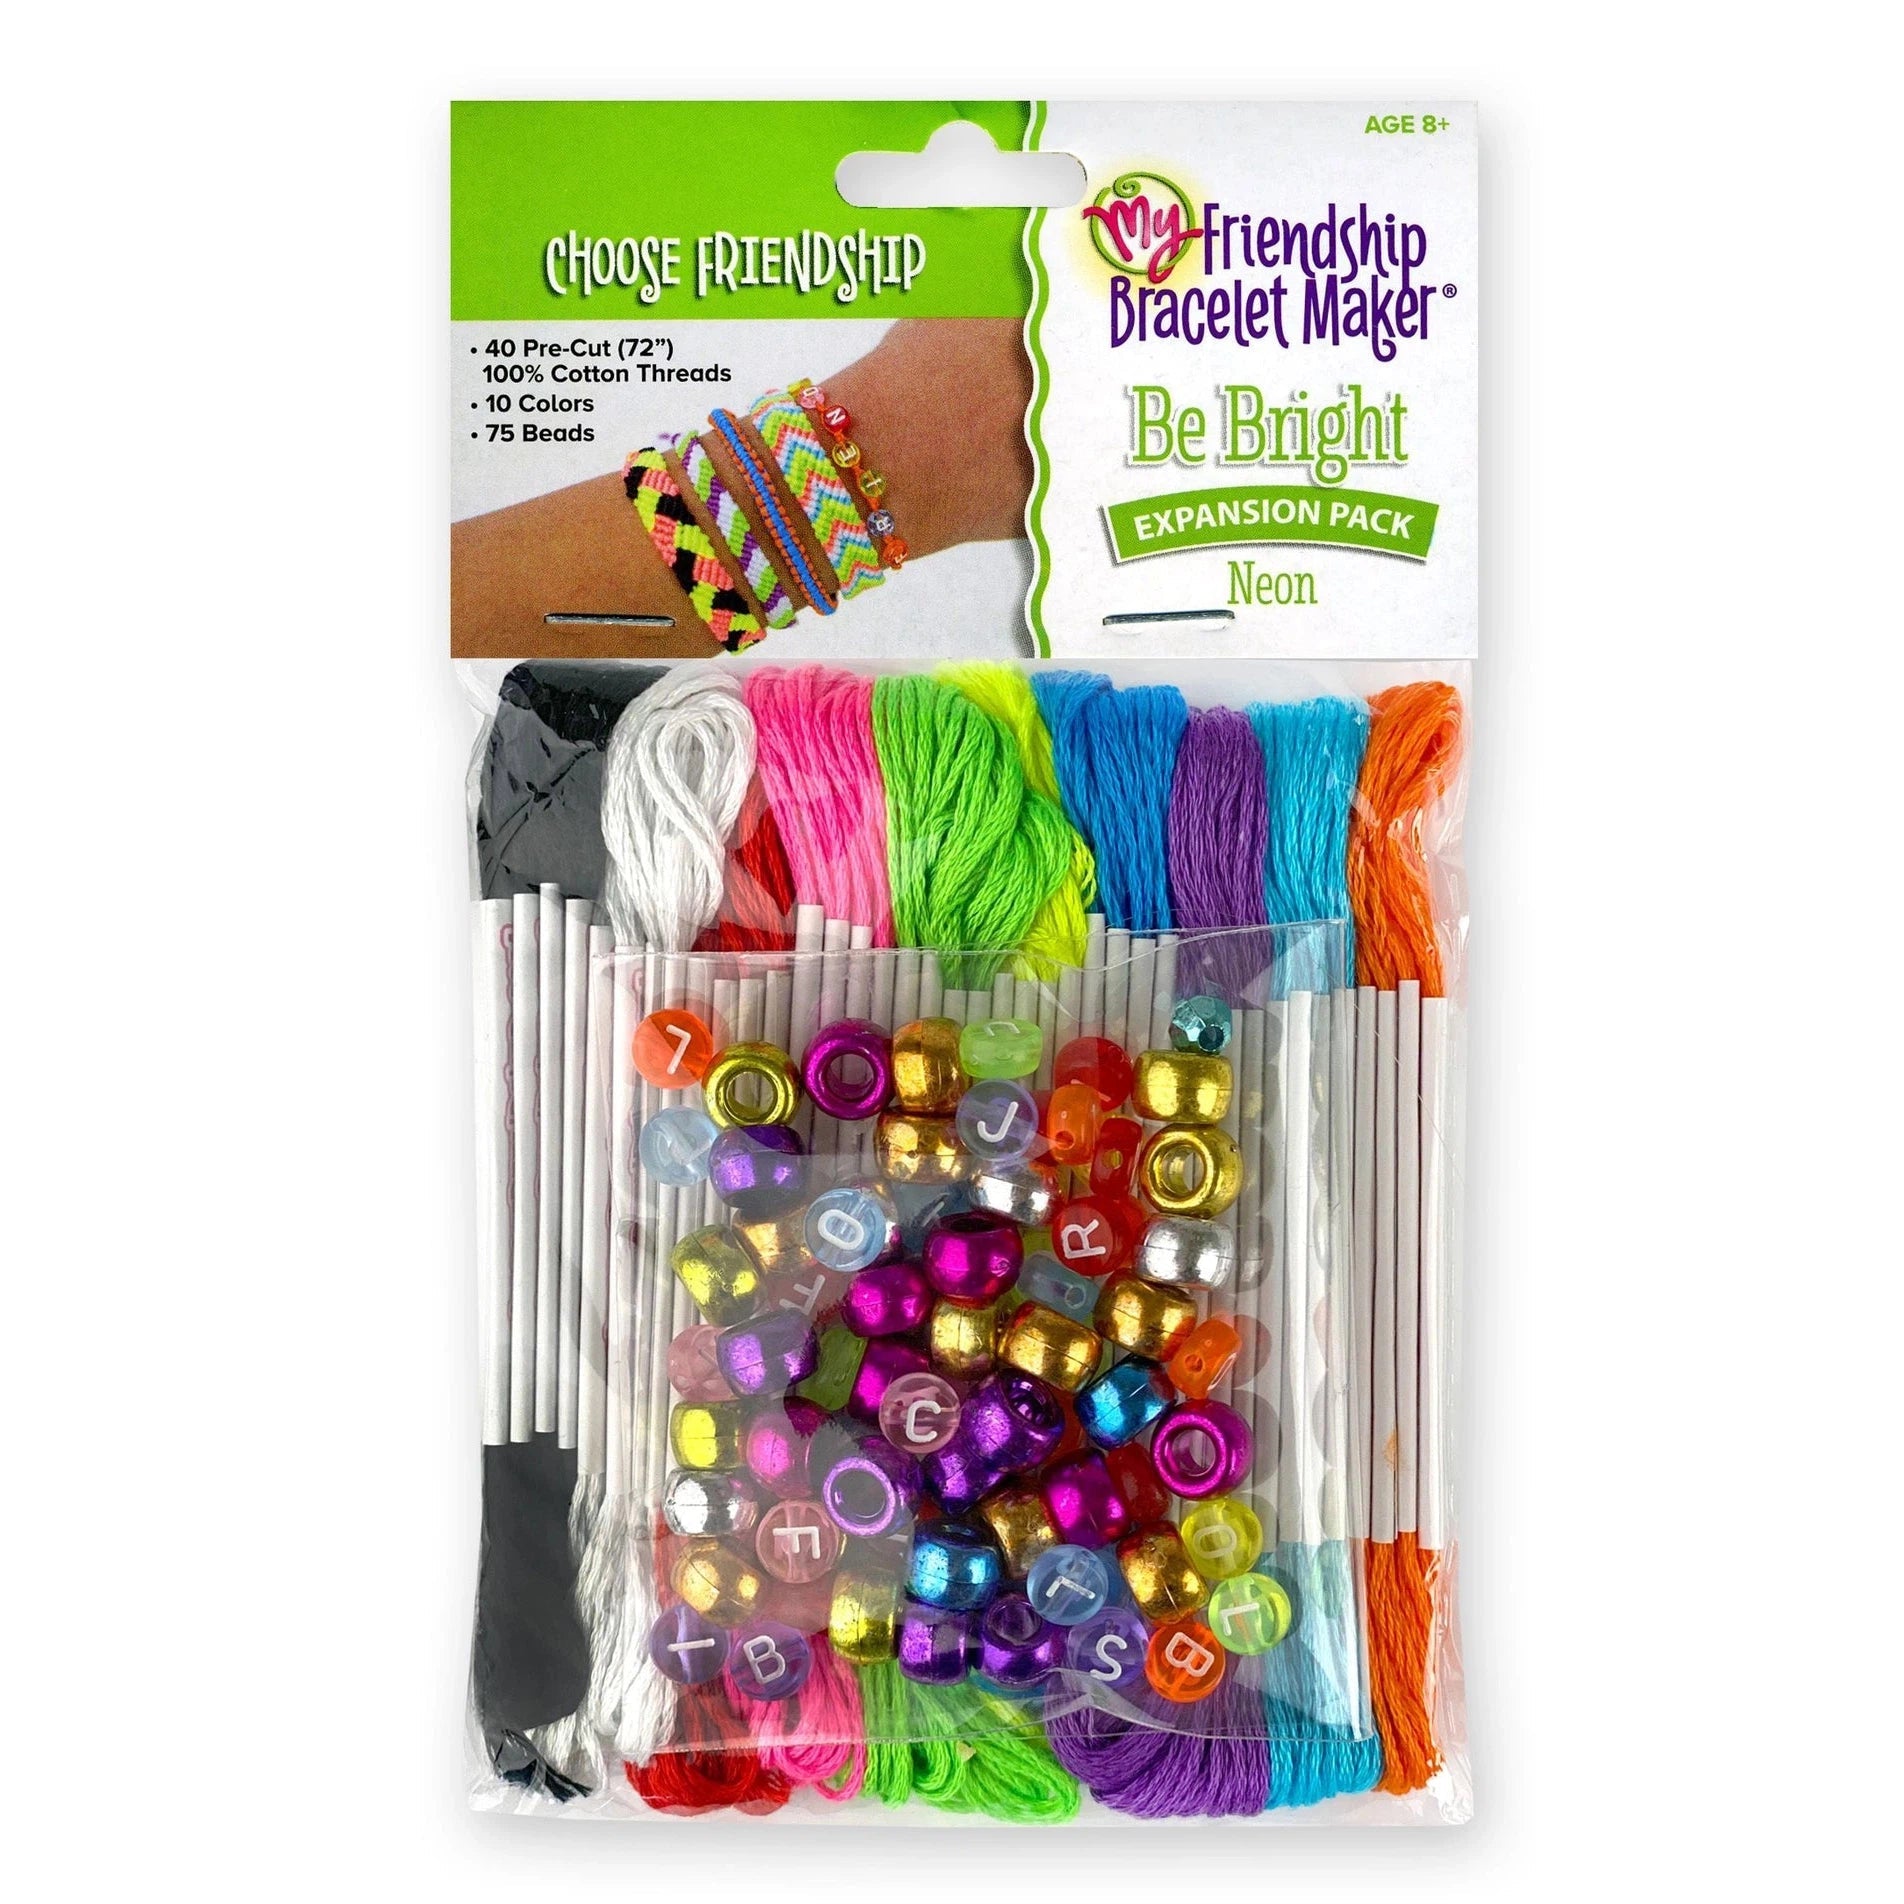 Choose Friendship My Friendship Bracelet Maker Expansion Pack - Be Bri